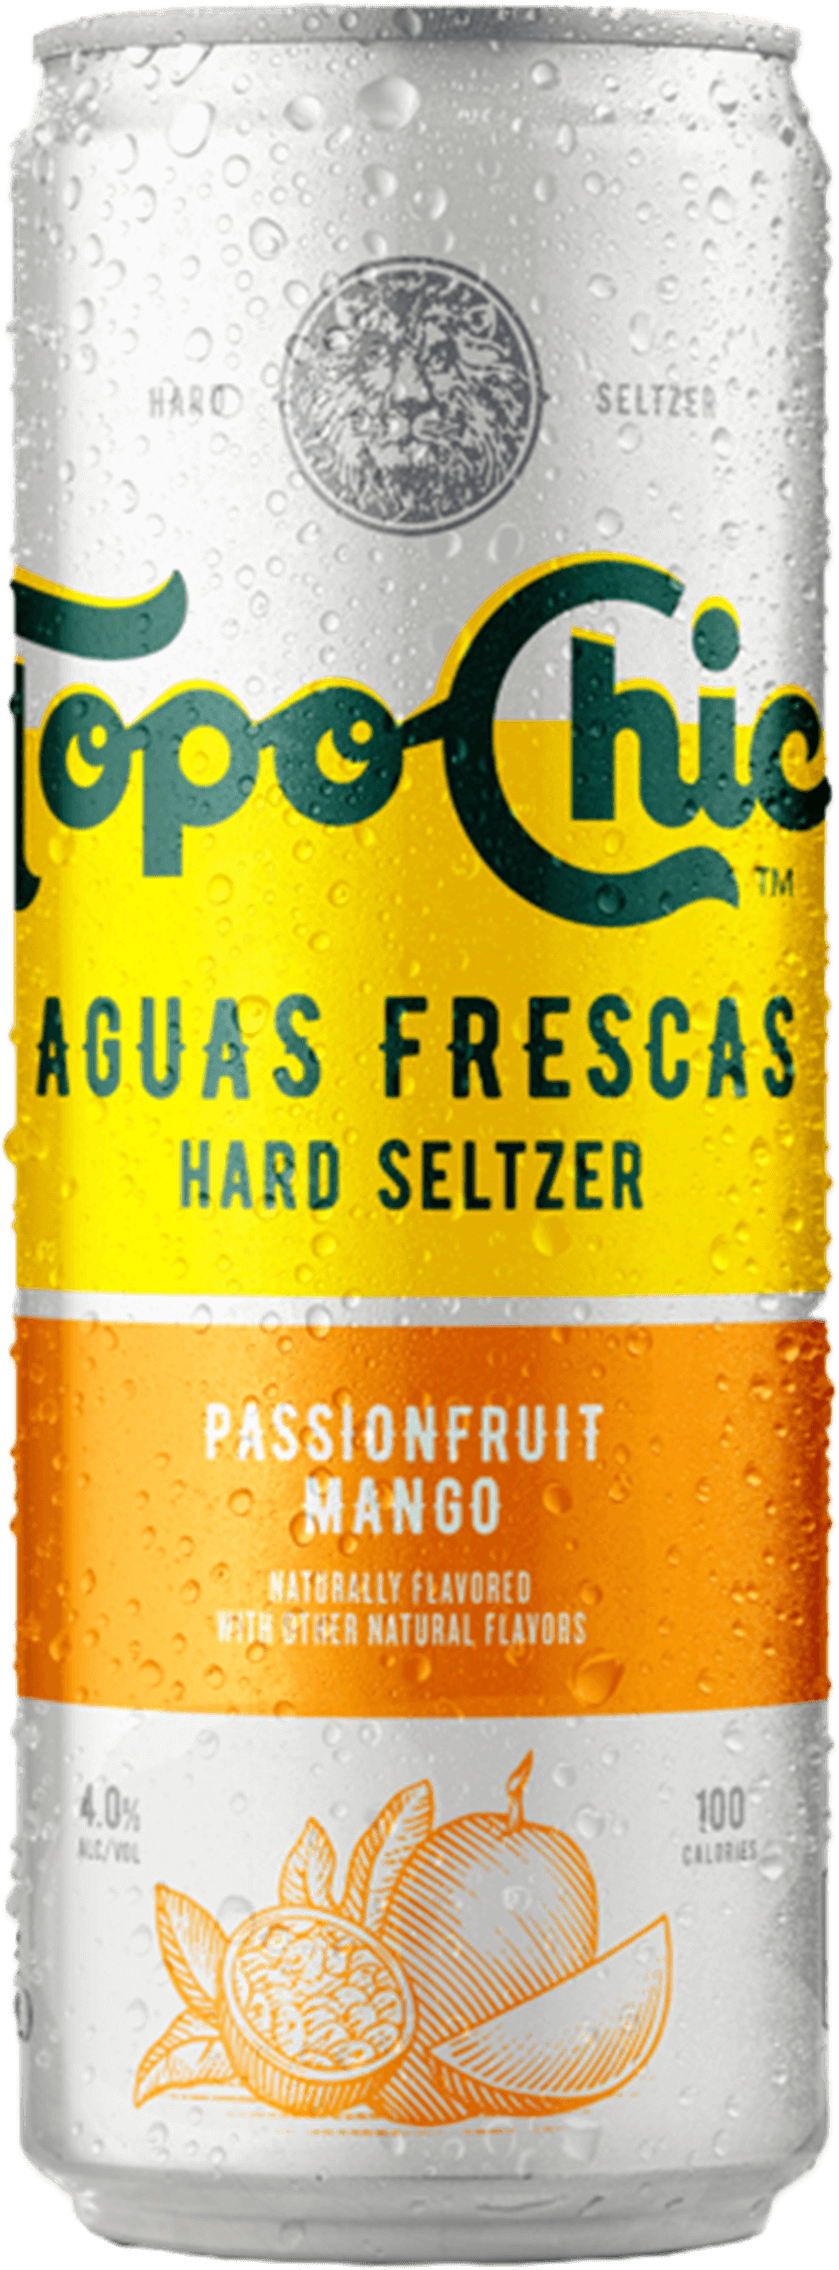 Passionfruit Mango can